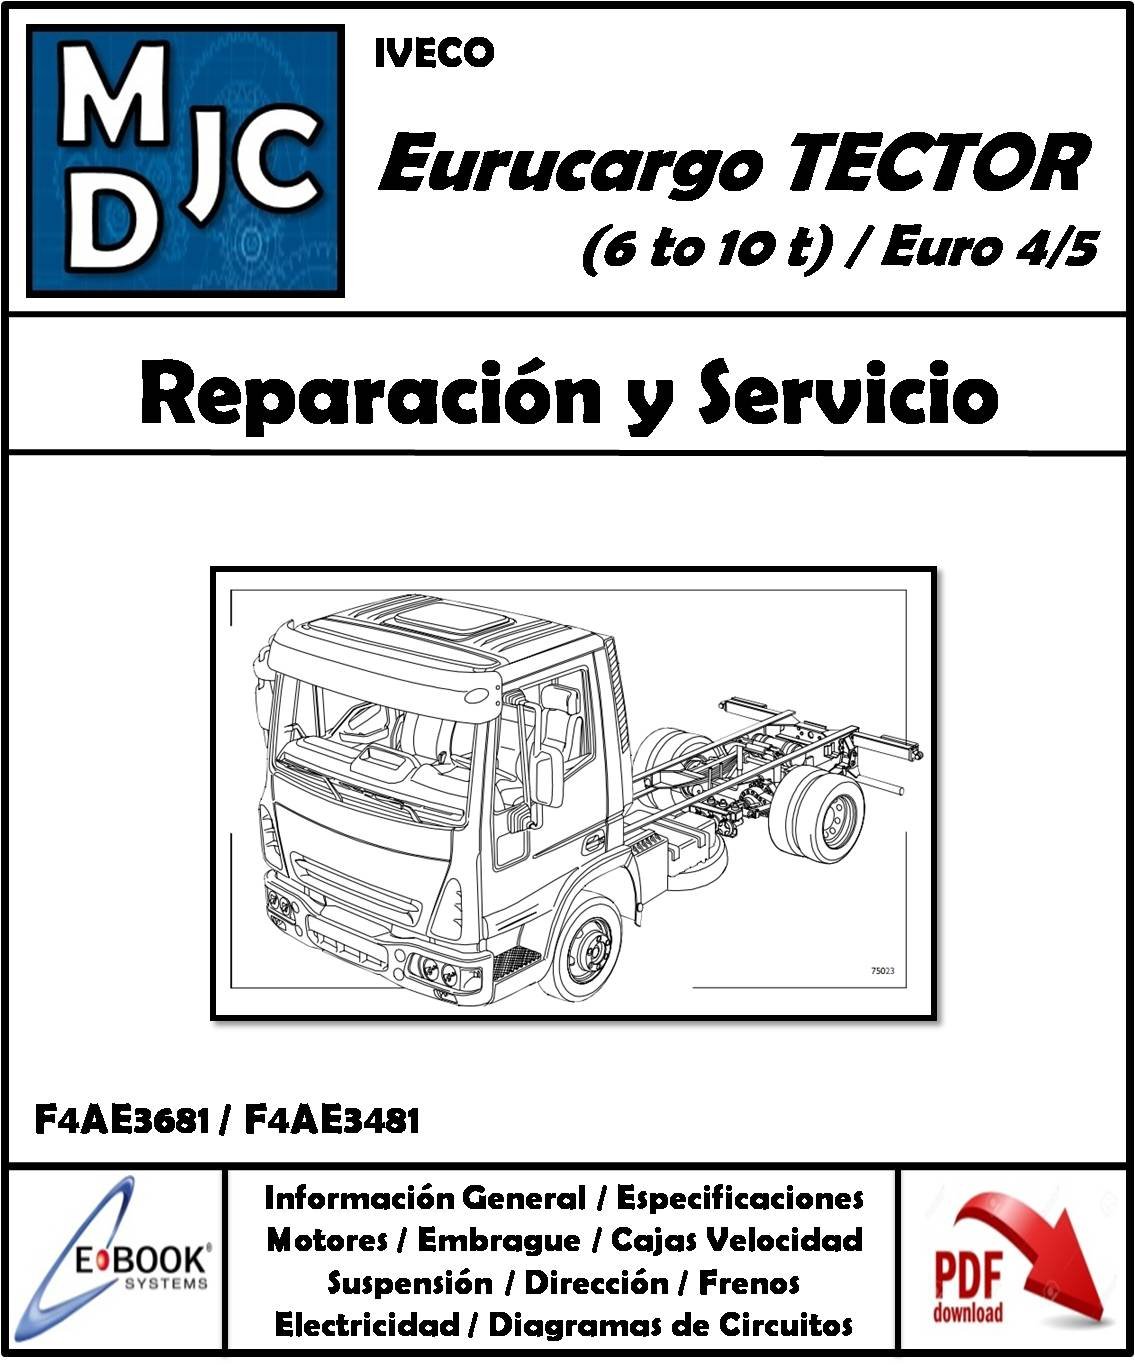 Iveco Eurocargo Tector 6 a 10 t